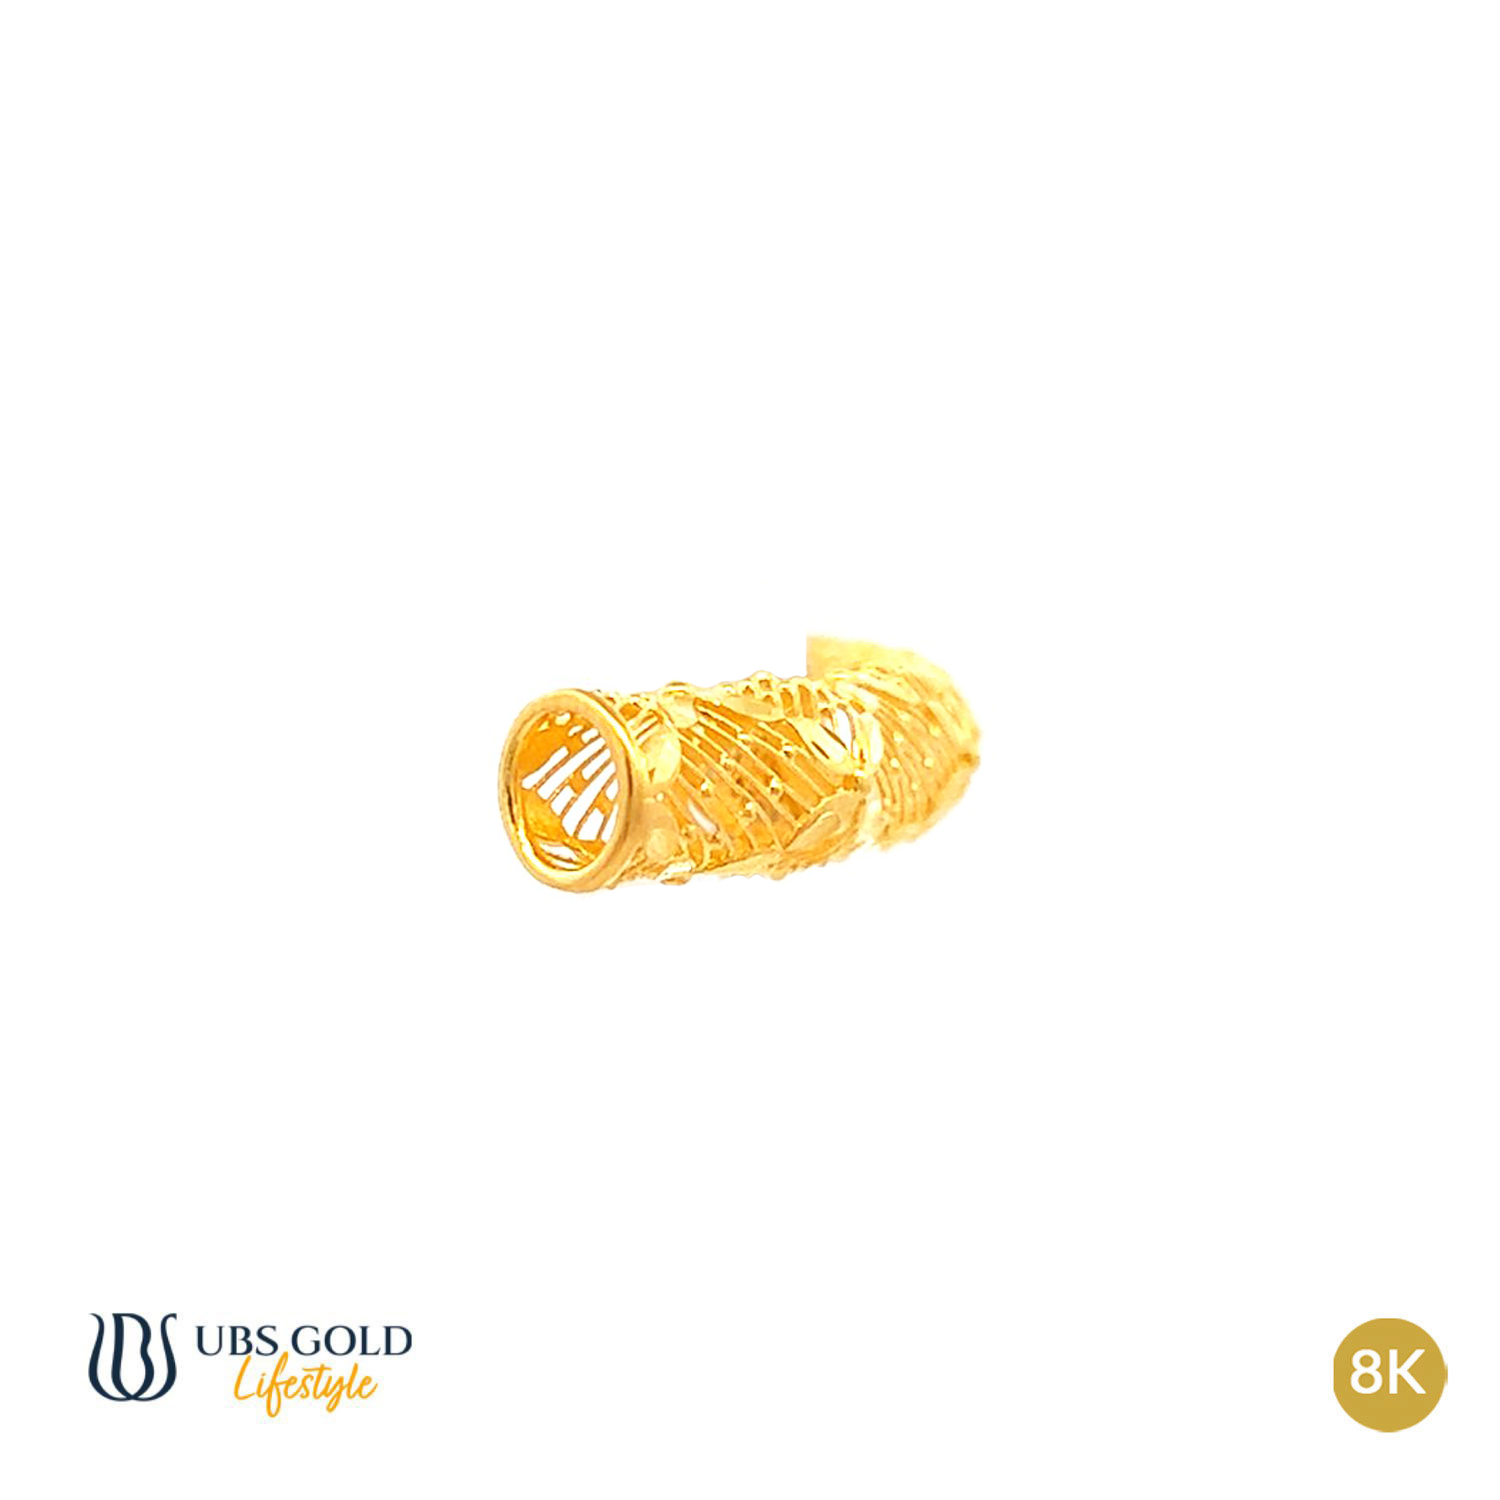 UBS Gold Liontin Emas Sakura - Cdm0084 - 8K